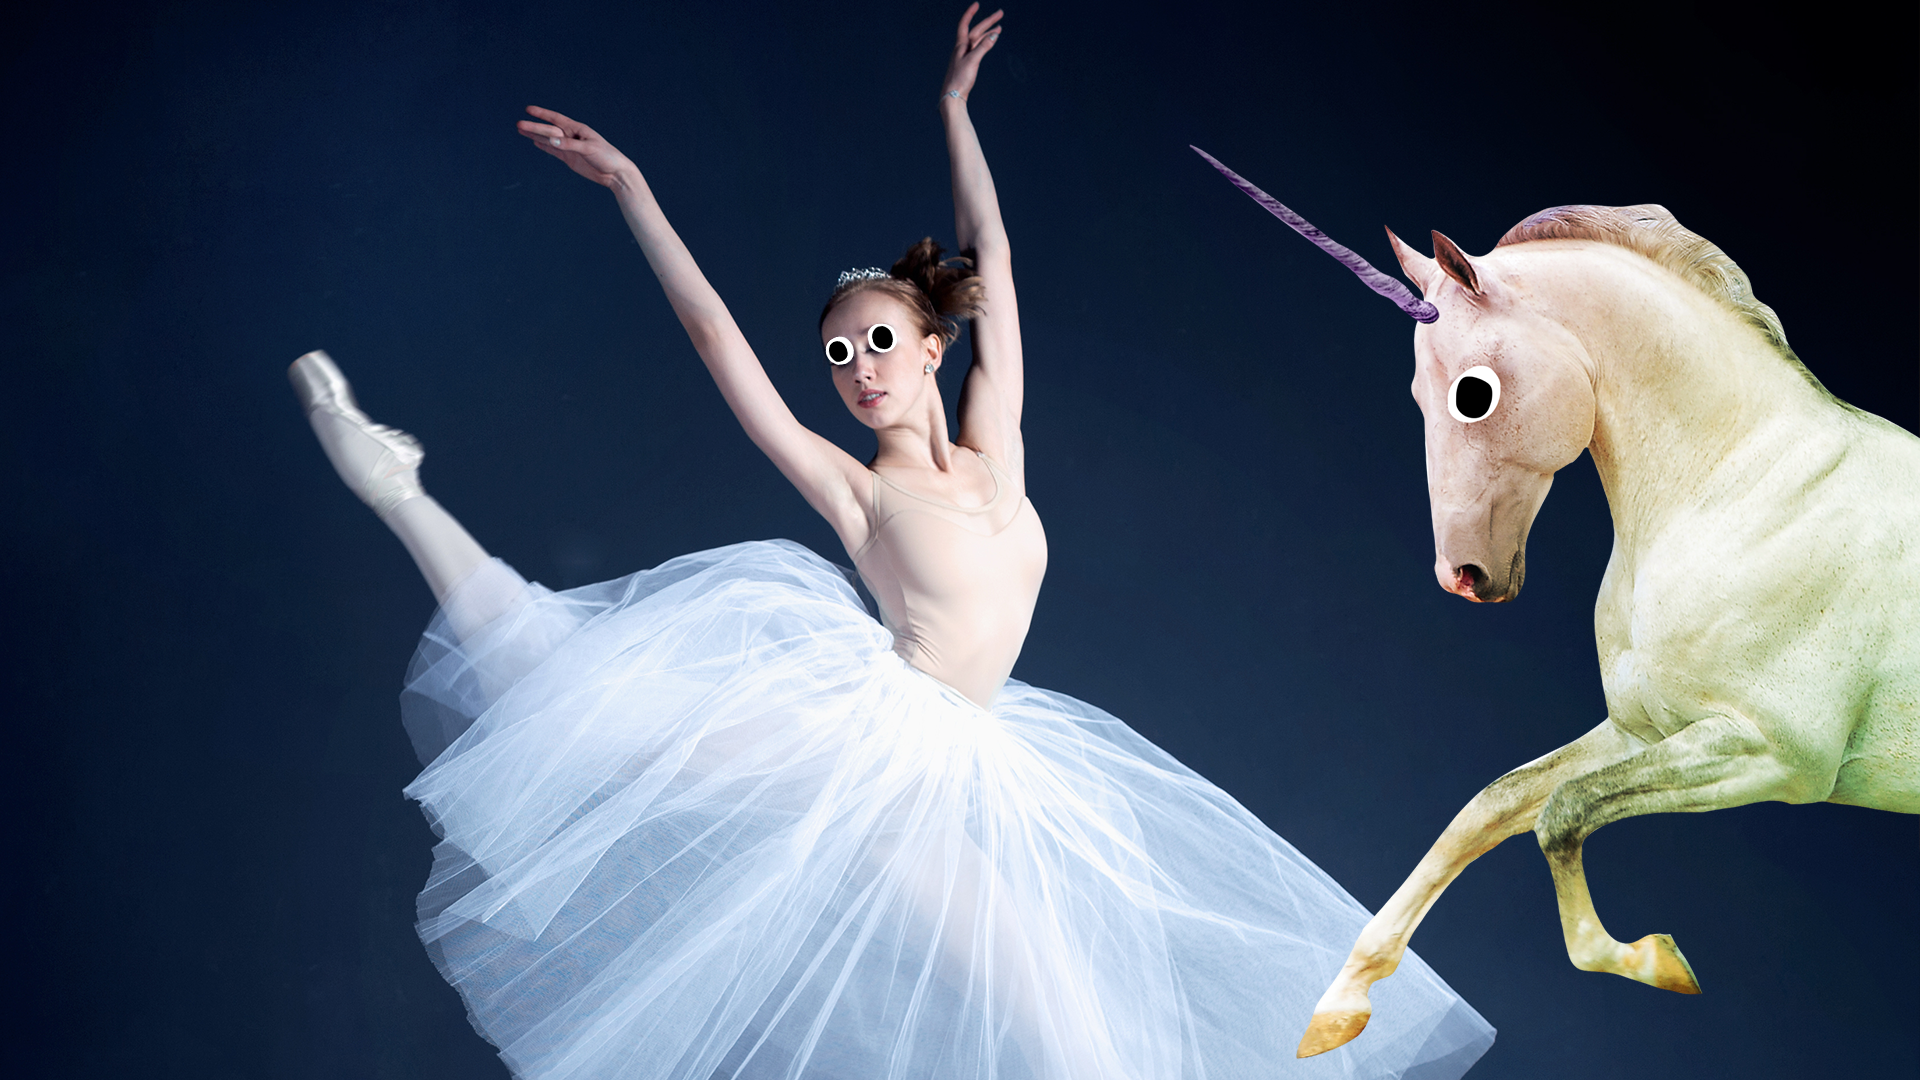 Ballerina on dark background with Beano unicorn